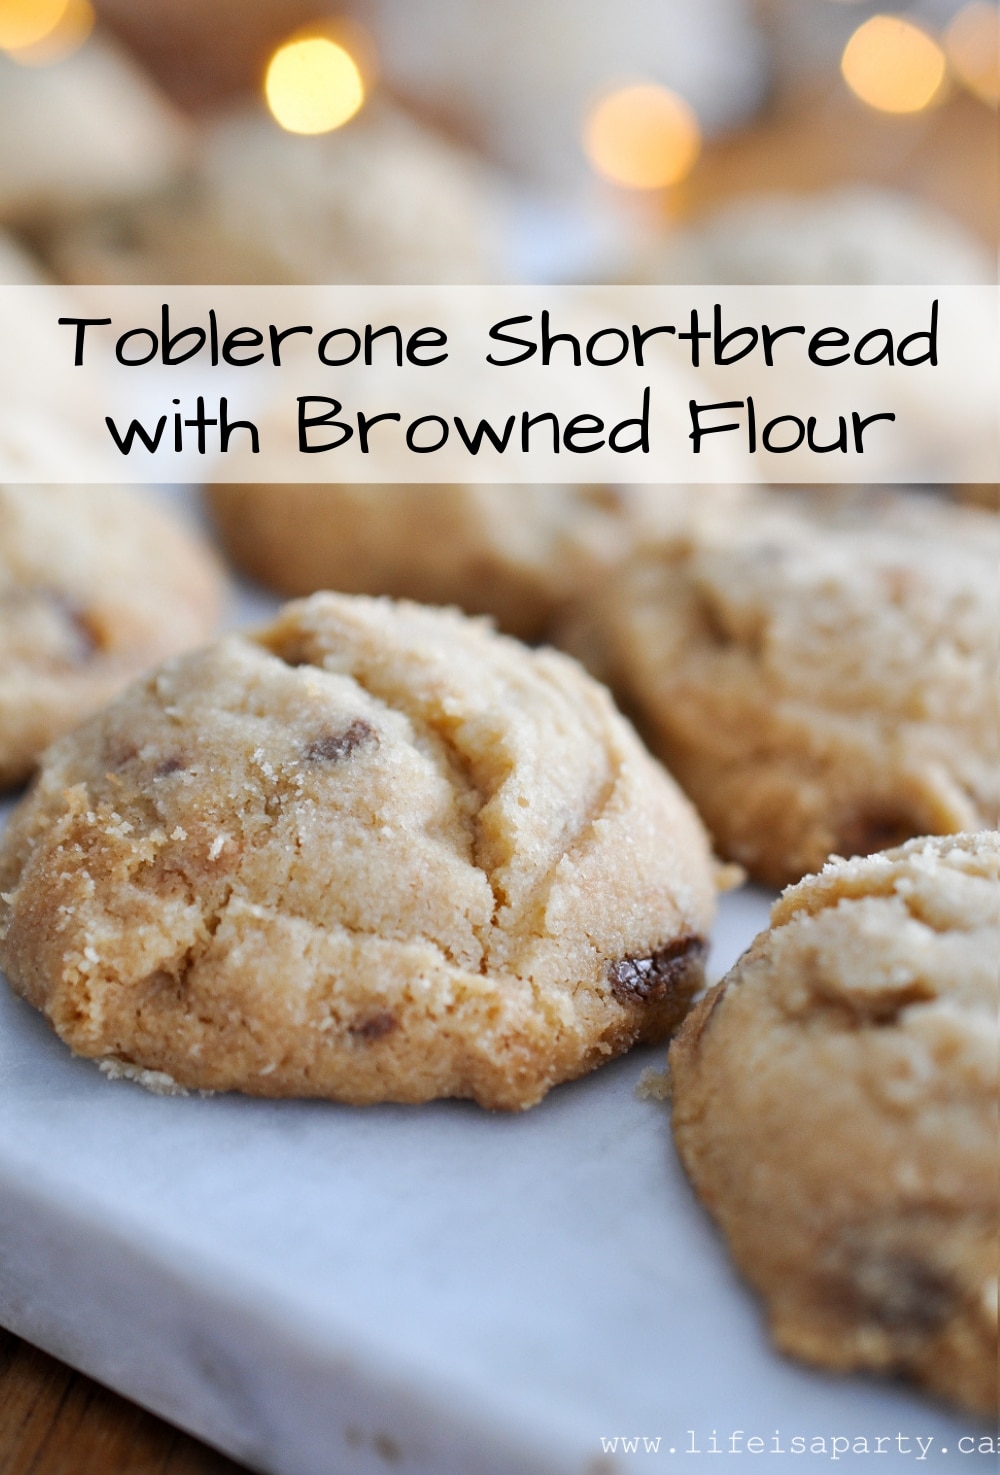 Toblerone Shortbread Cookies with Browned Flour